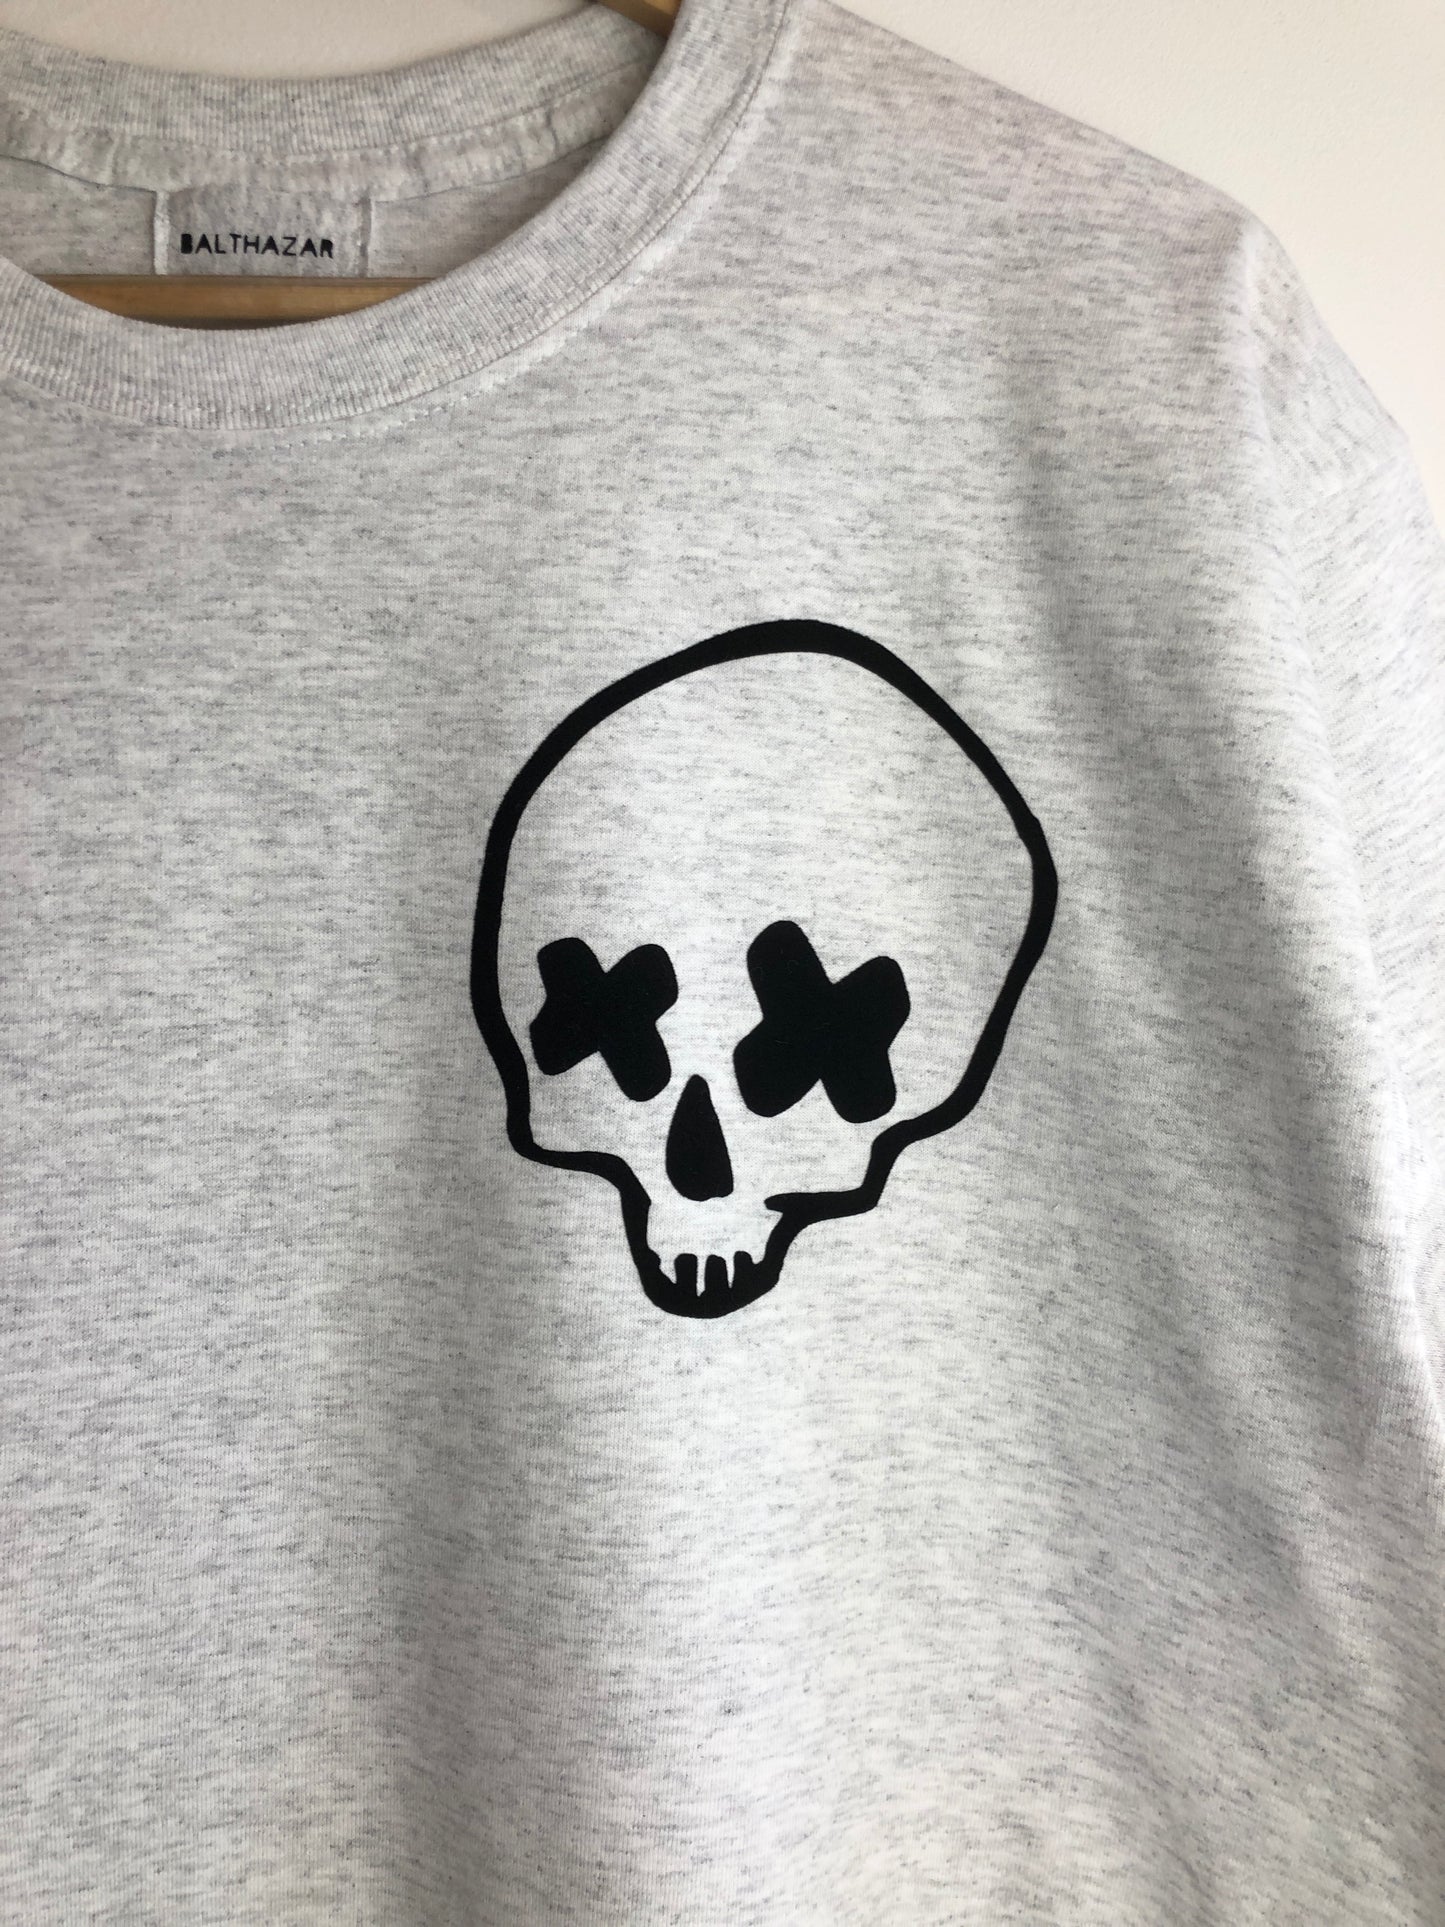 Cross eyed skull t-shirt